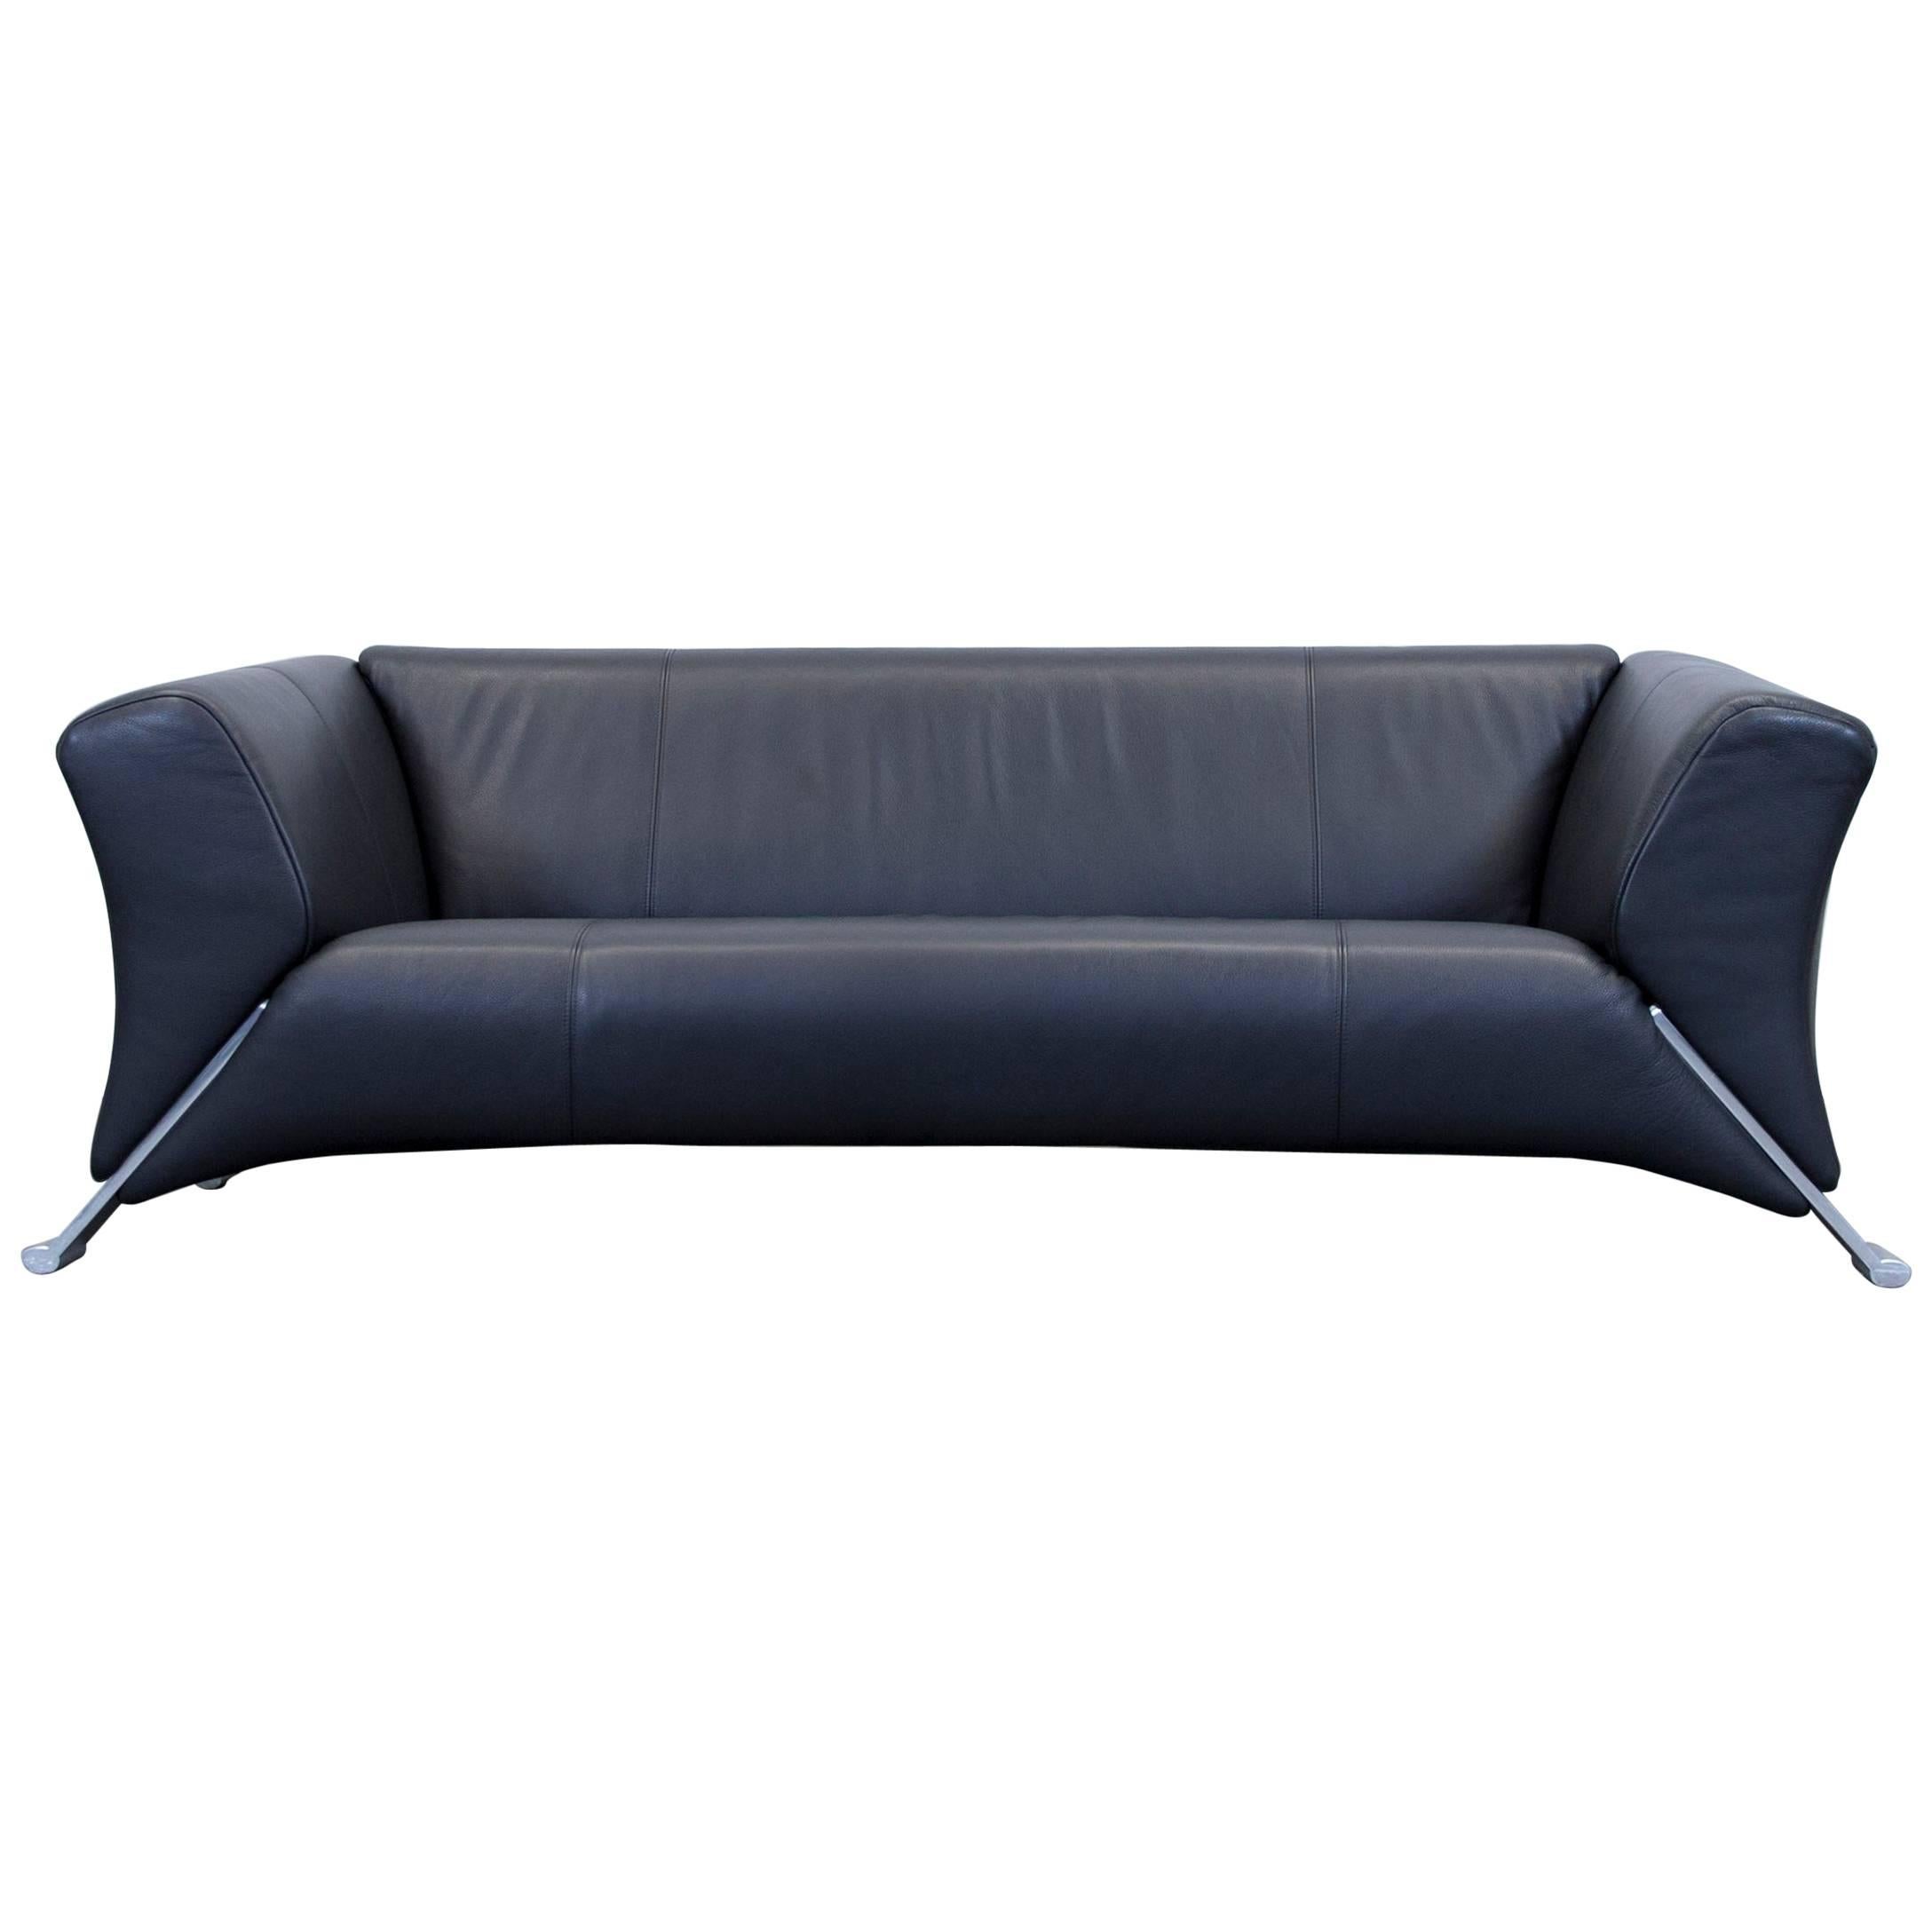 Rolf Benz 322 Designer Leather Sofa Black Three-Seat Couch Modern